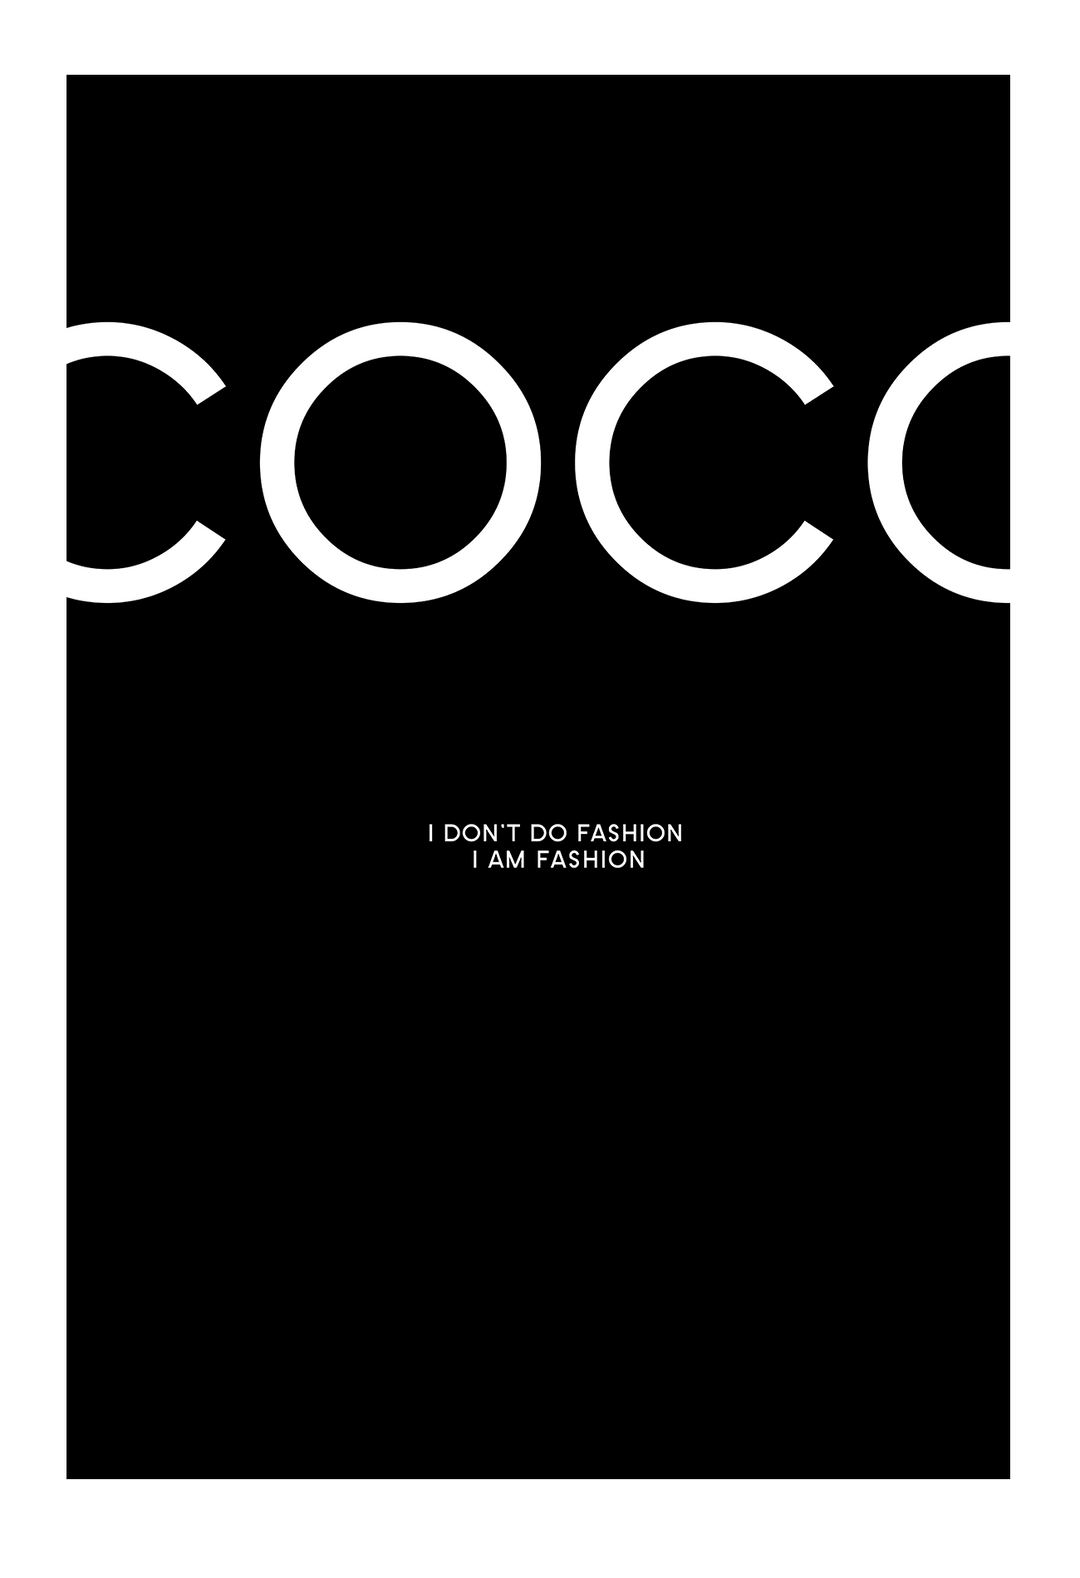 Canvas Print Coco Fashion Black Coco Fashion Black Wall Art : Ready to hang framed artwork. Brand